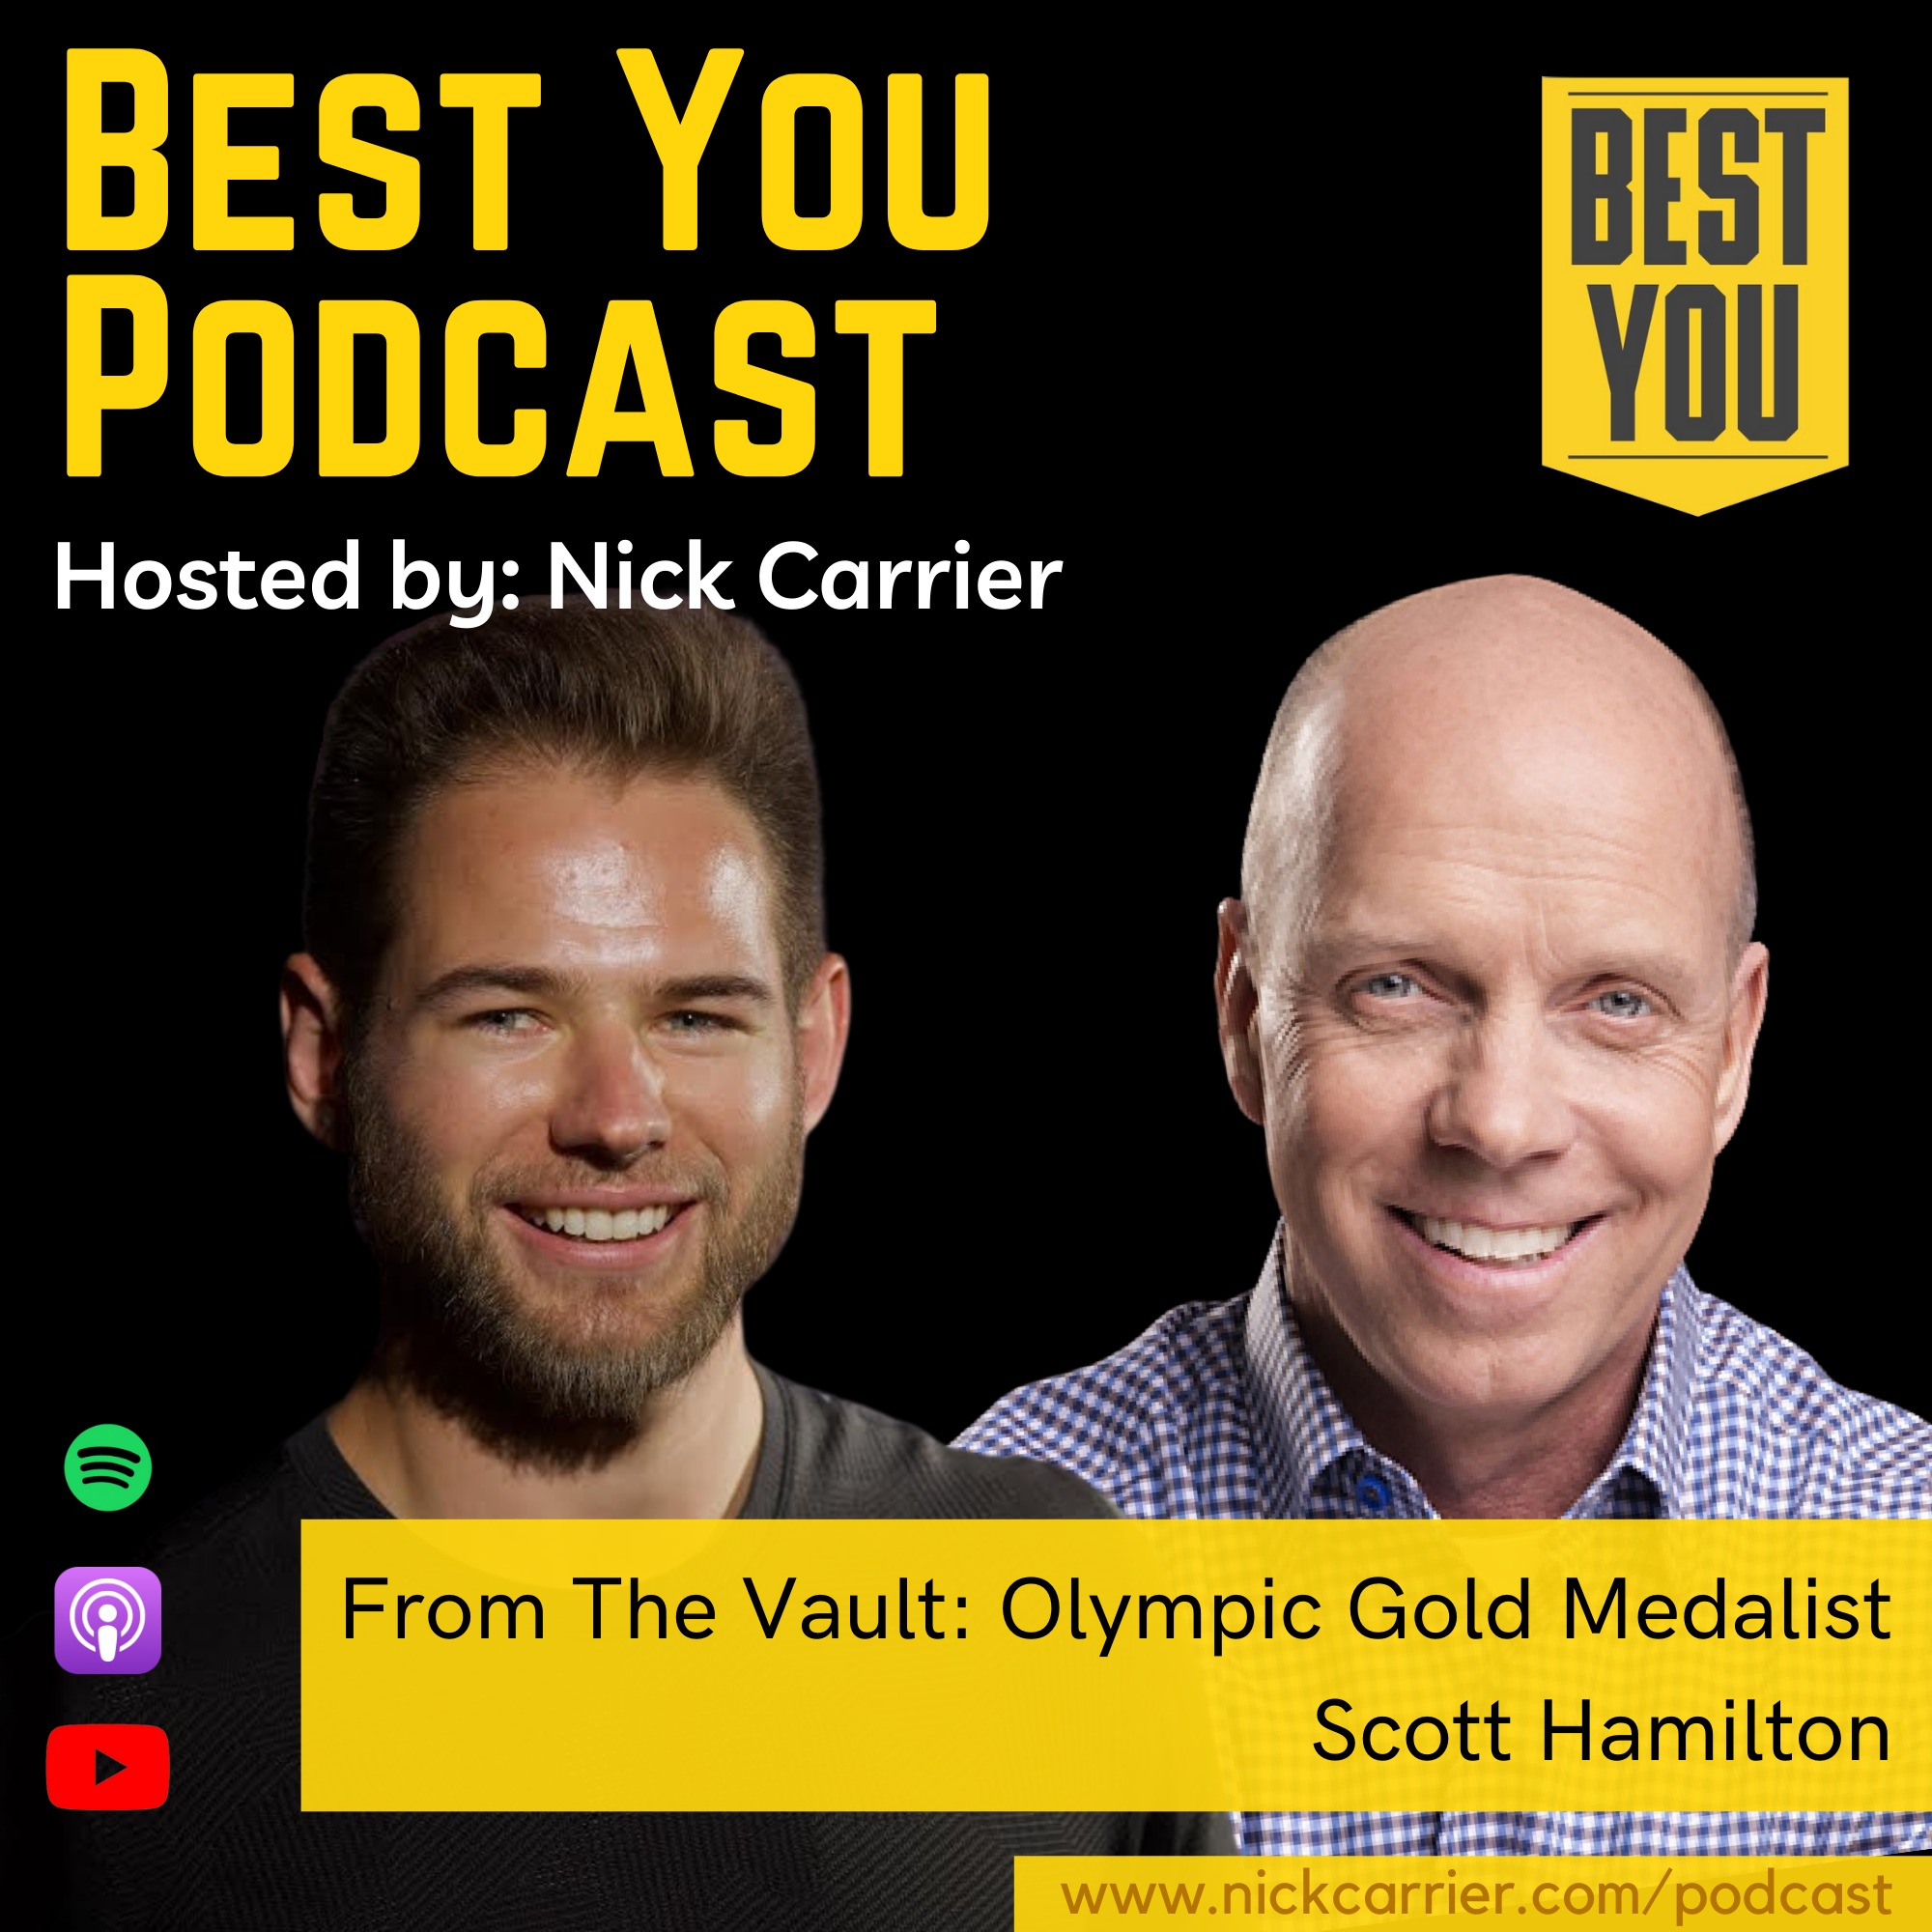 From The Vault: Olympic Gold Medalist Scott Hamilton